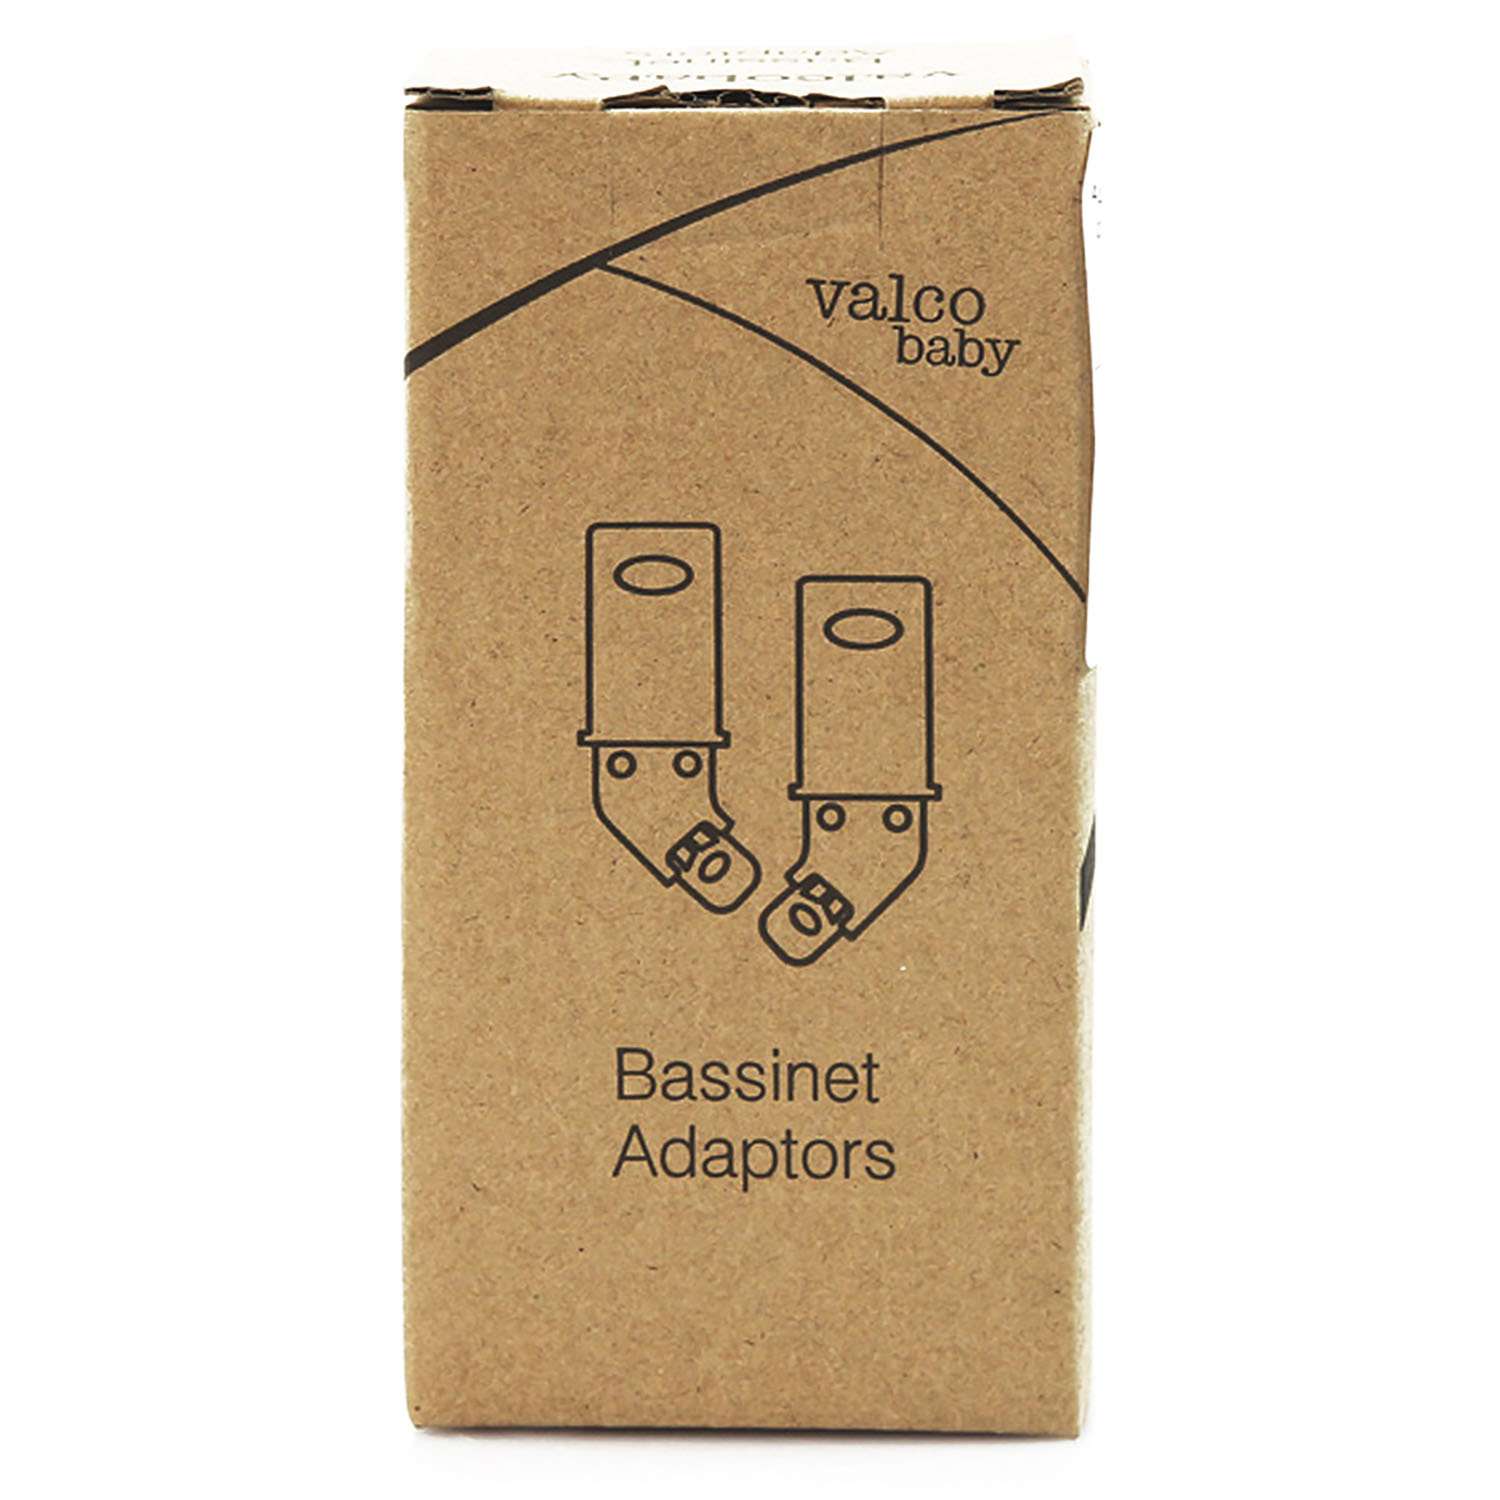 Адаптер Valco baby для люльки External Snap Trend Snap4 Trend Snap Duo Trend 9902 - фото 2